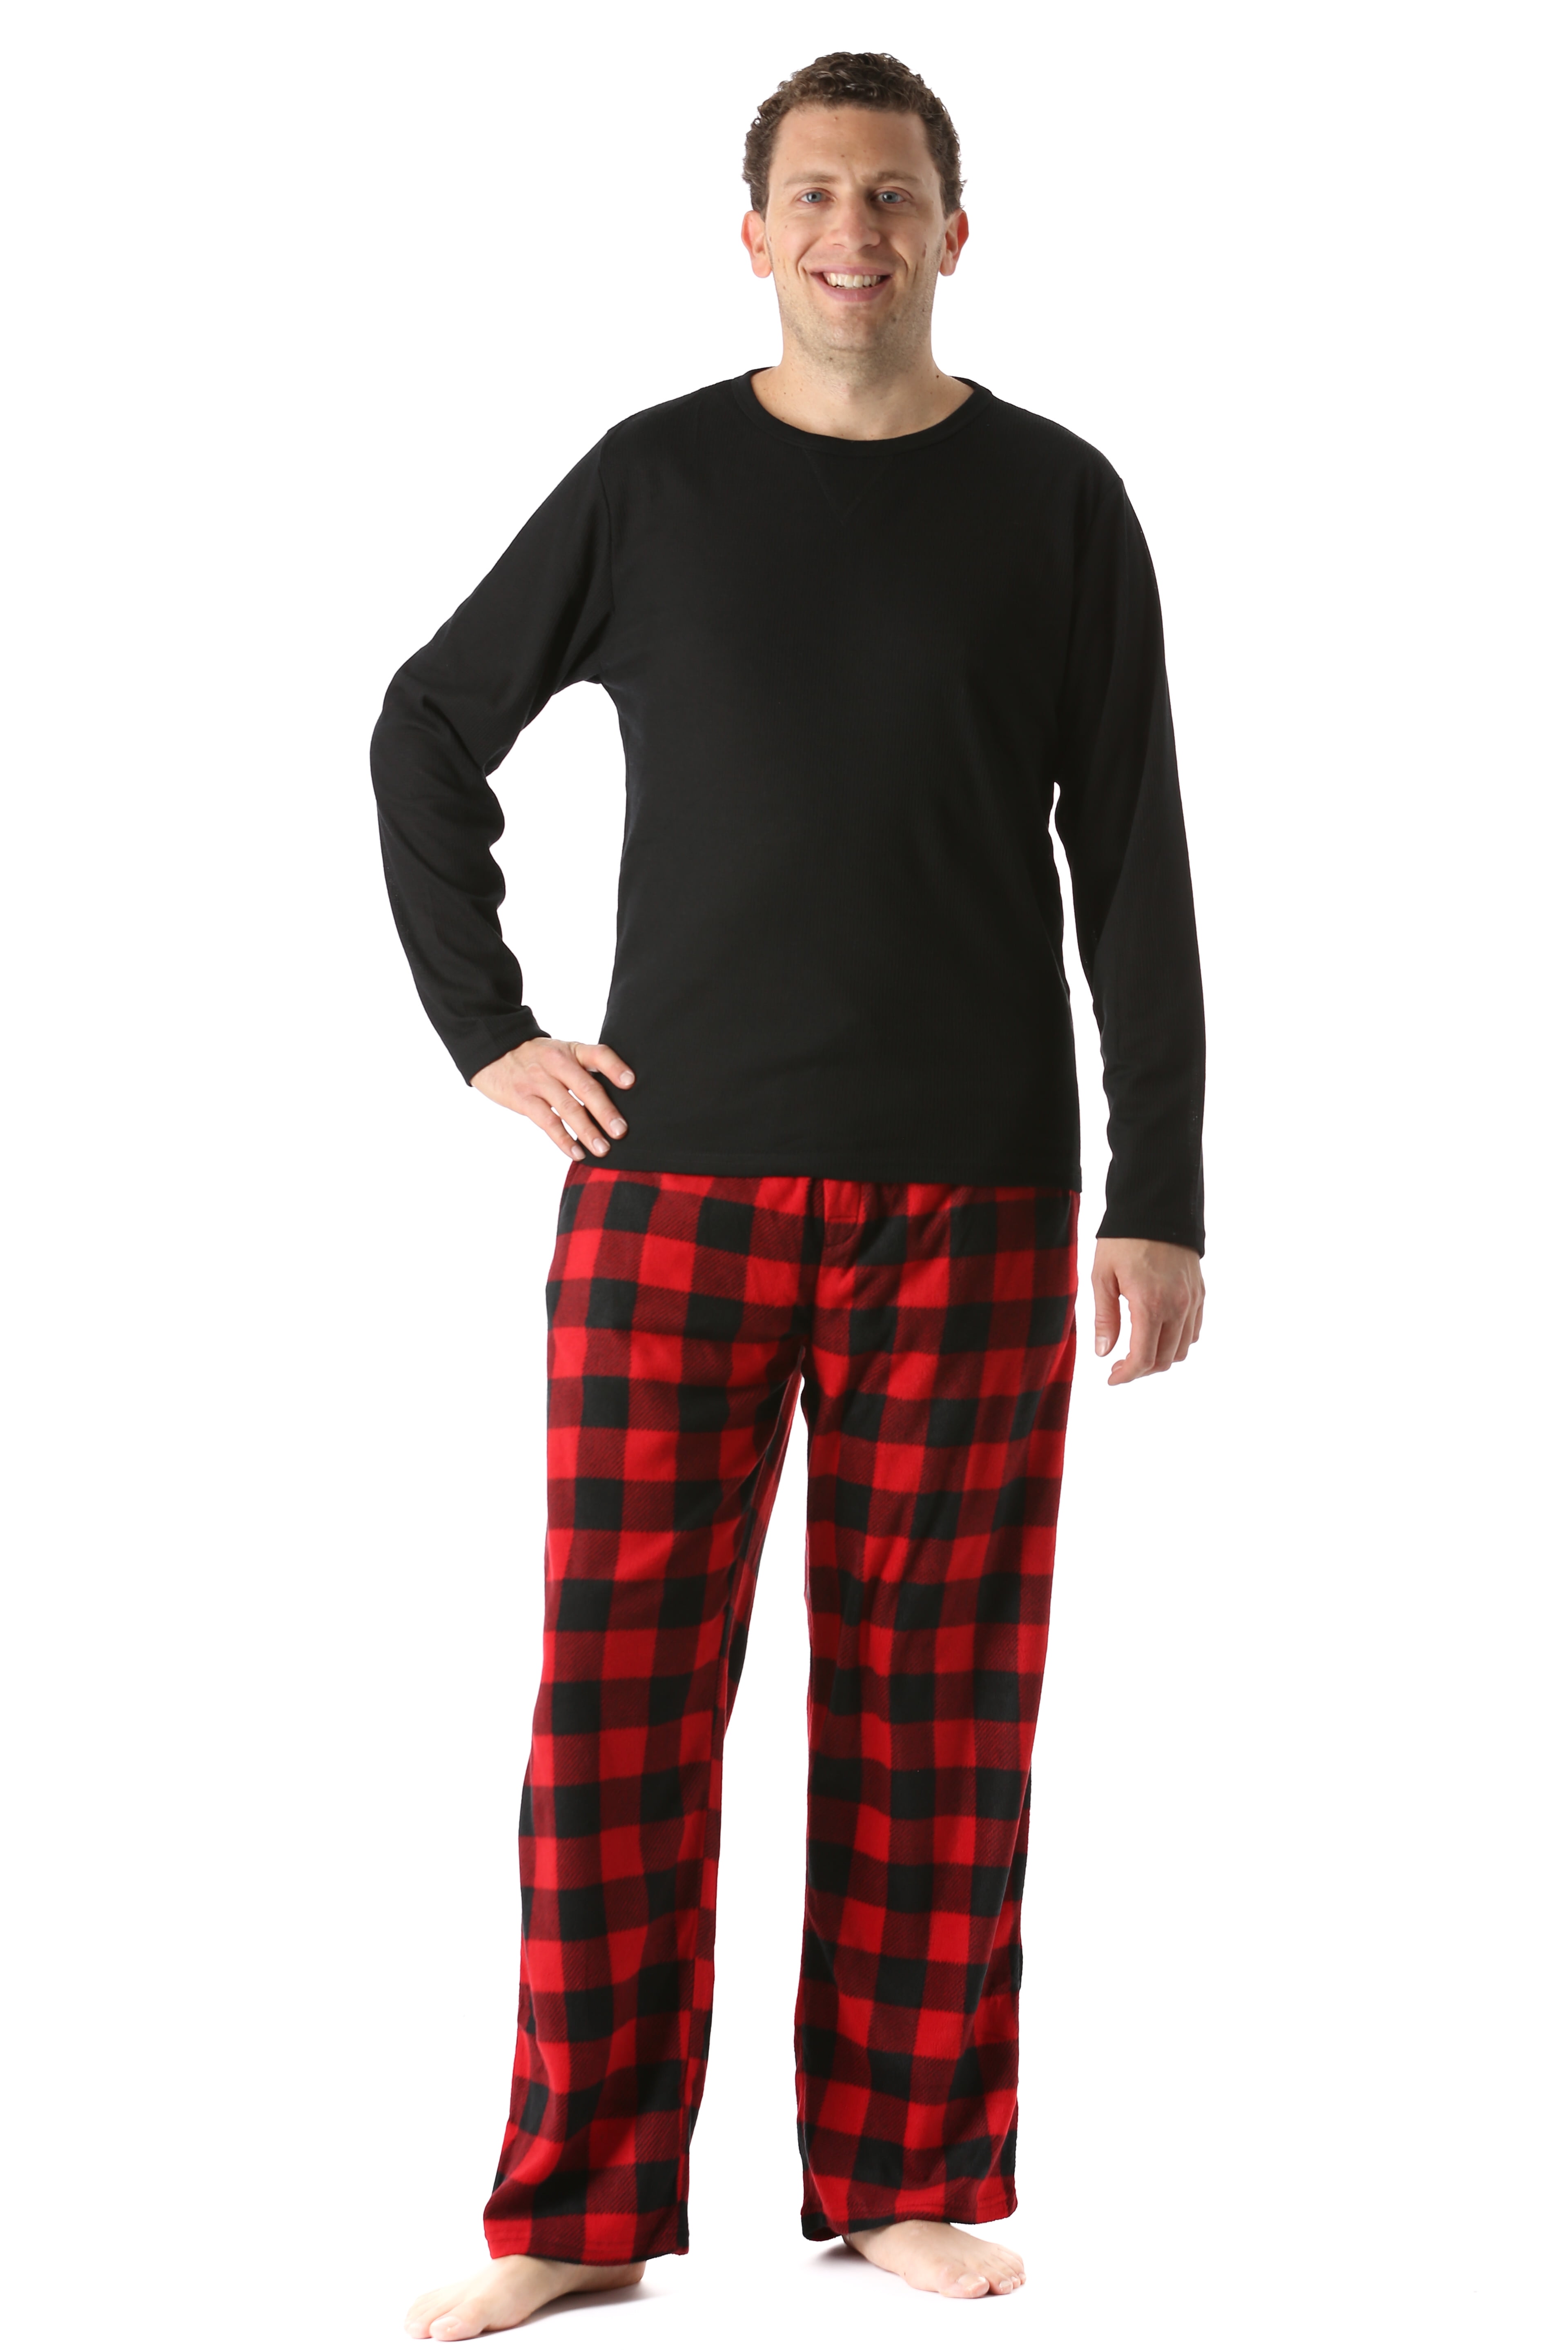 New Mens Flannel Fleece Pajama Pant Lounge Pants Size S M L XL XXL 